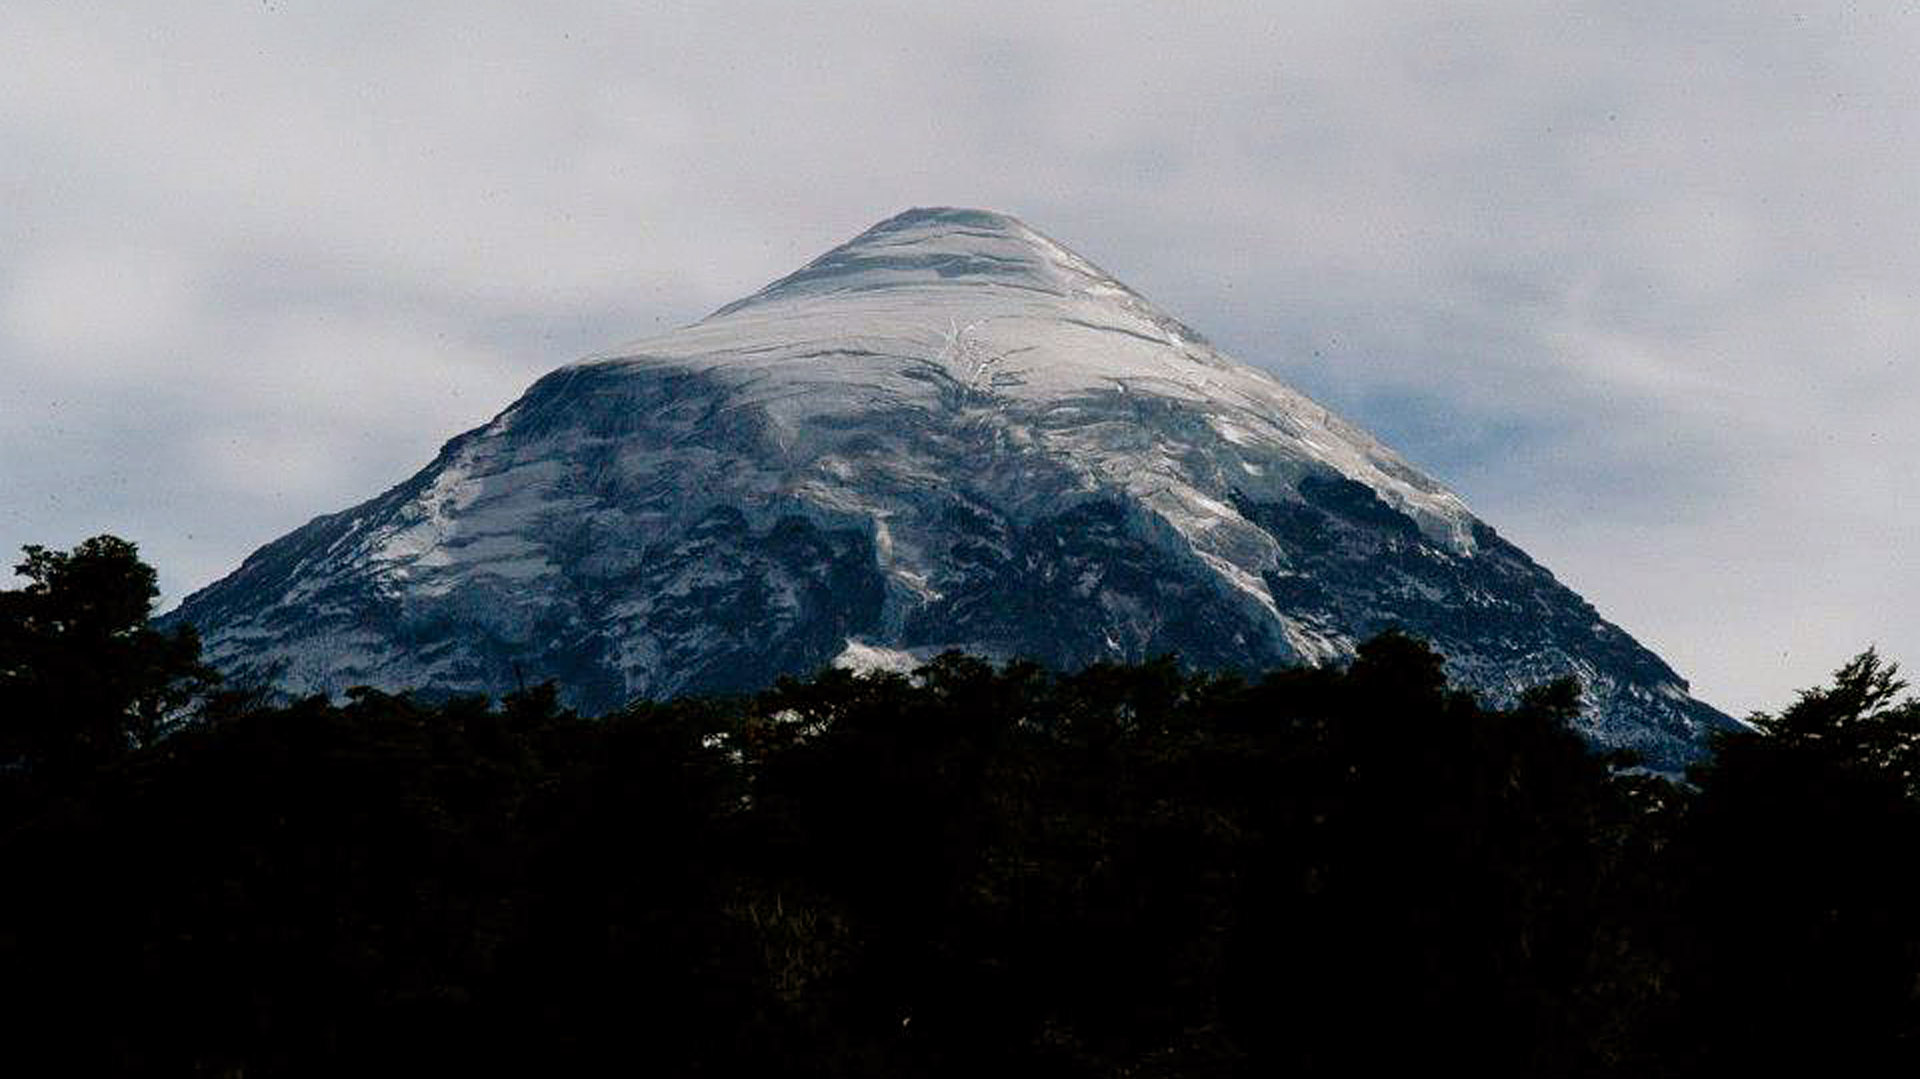 El volcán Lanín está ubicado en Neuquén